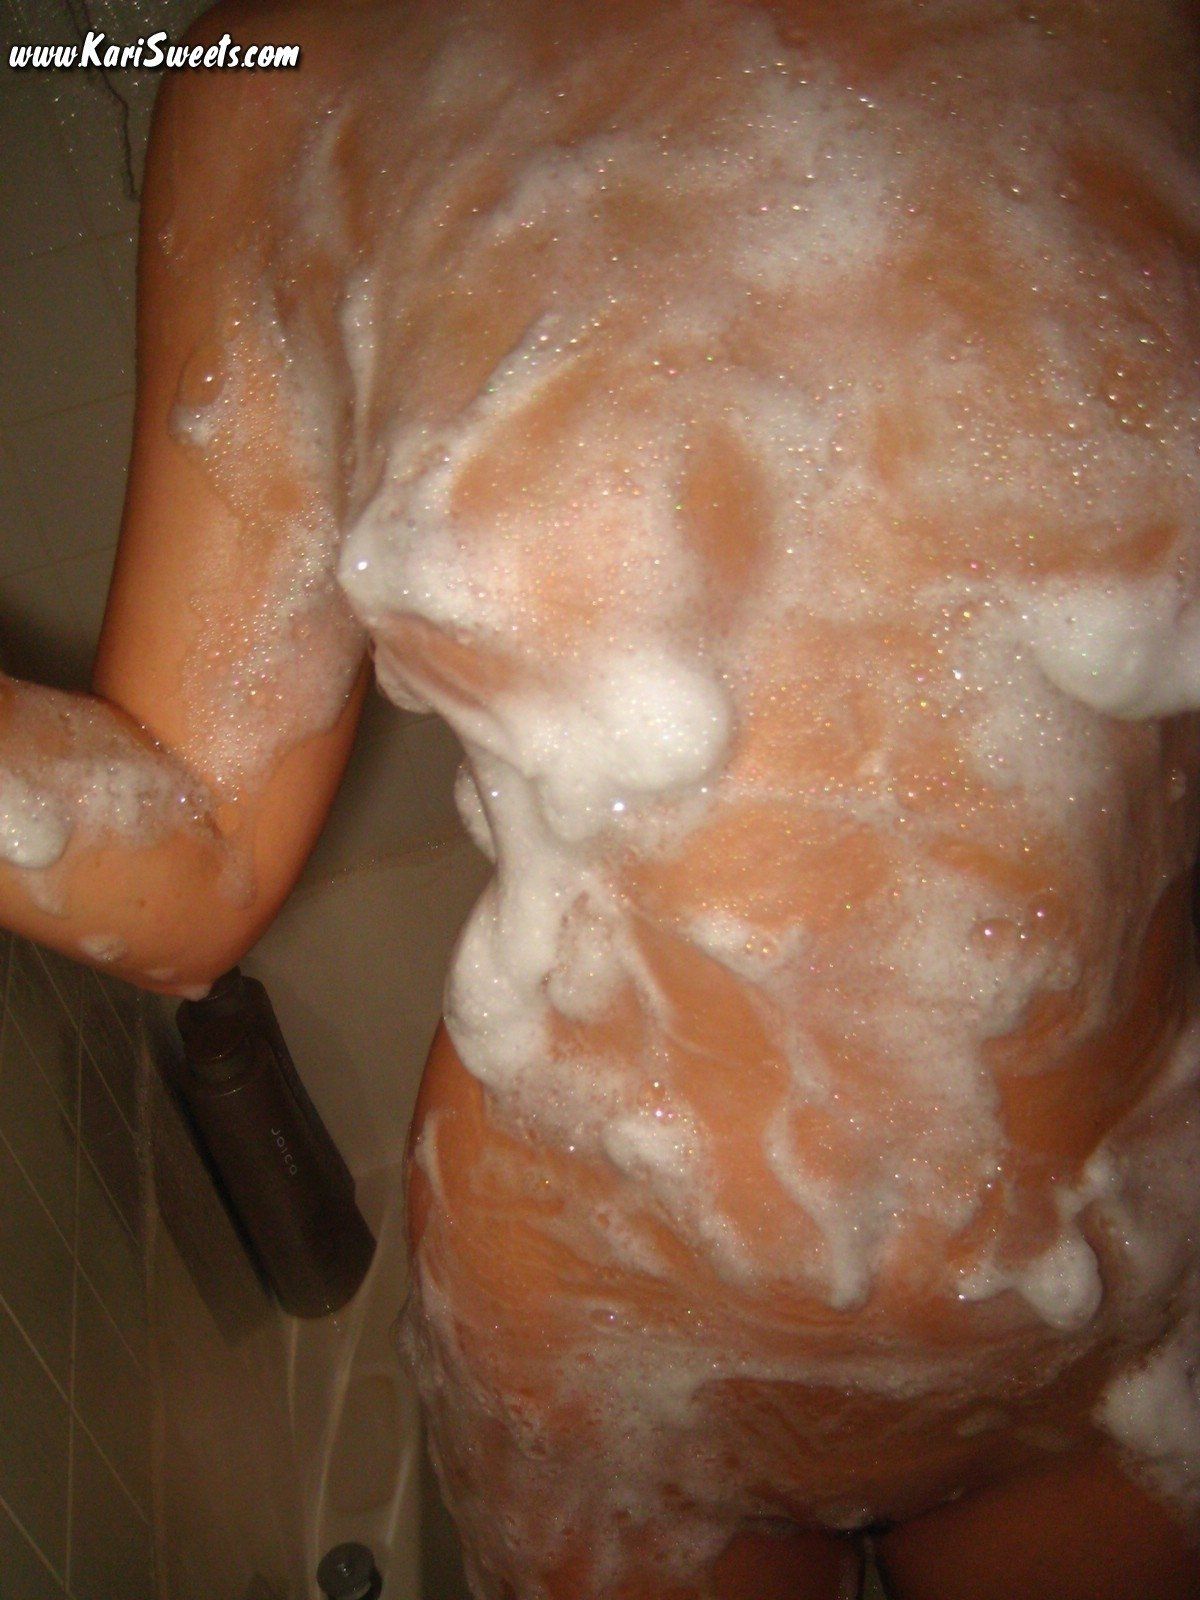 best of Sweets nude showers Kari